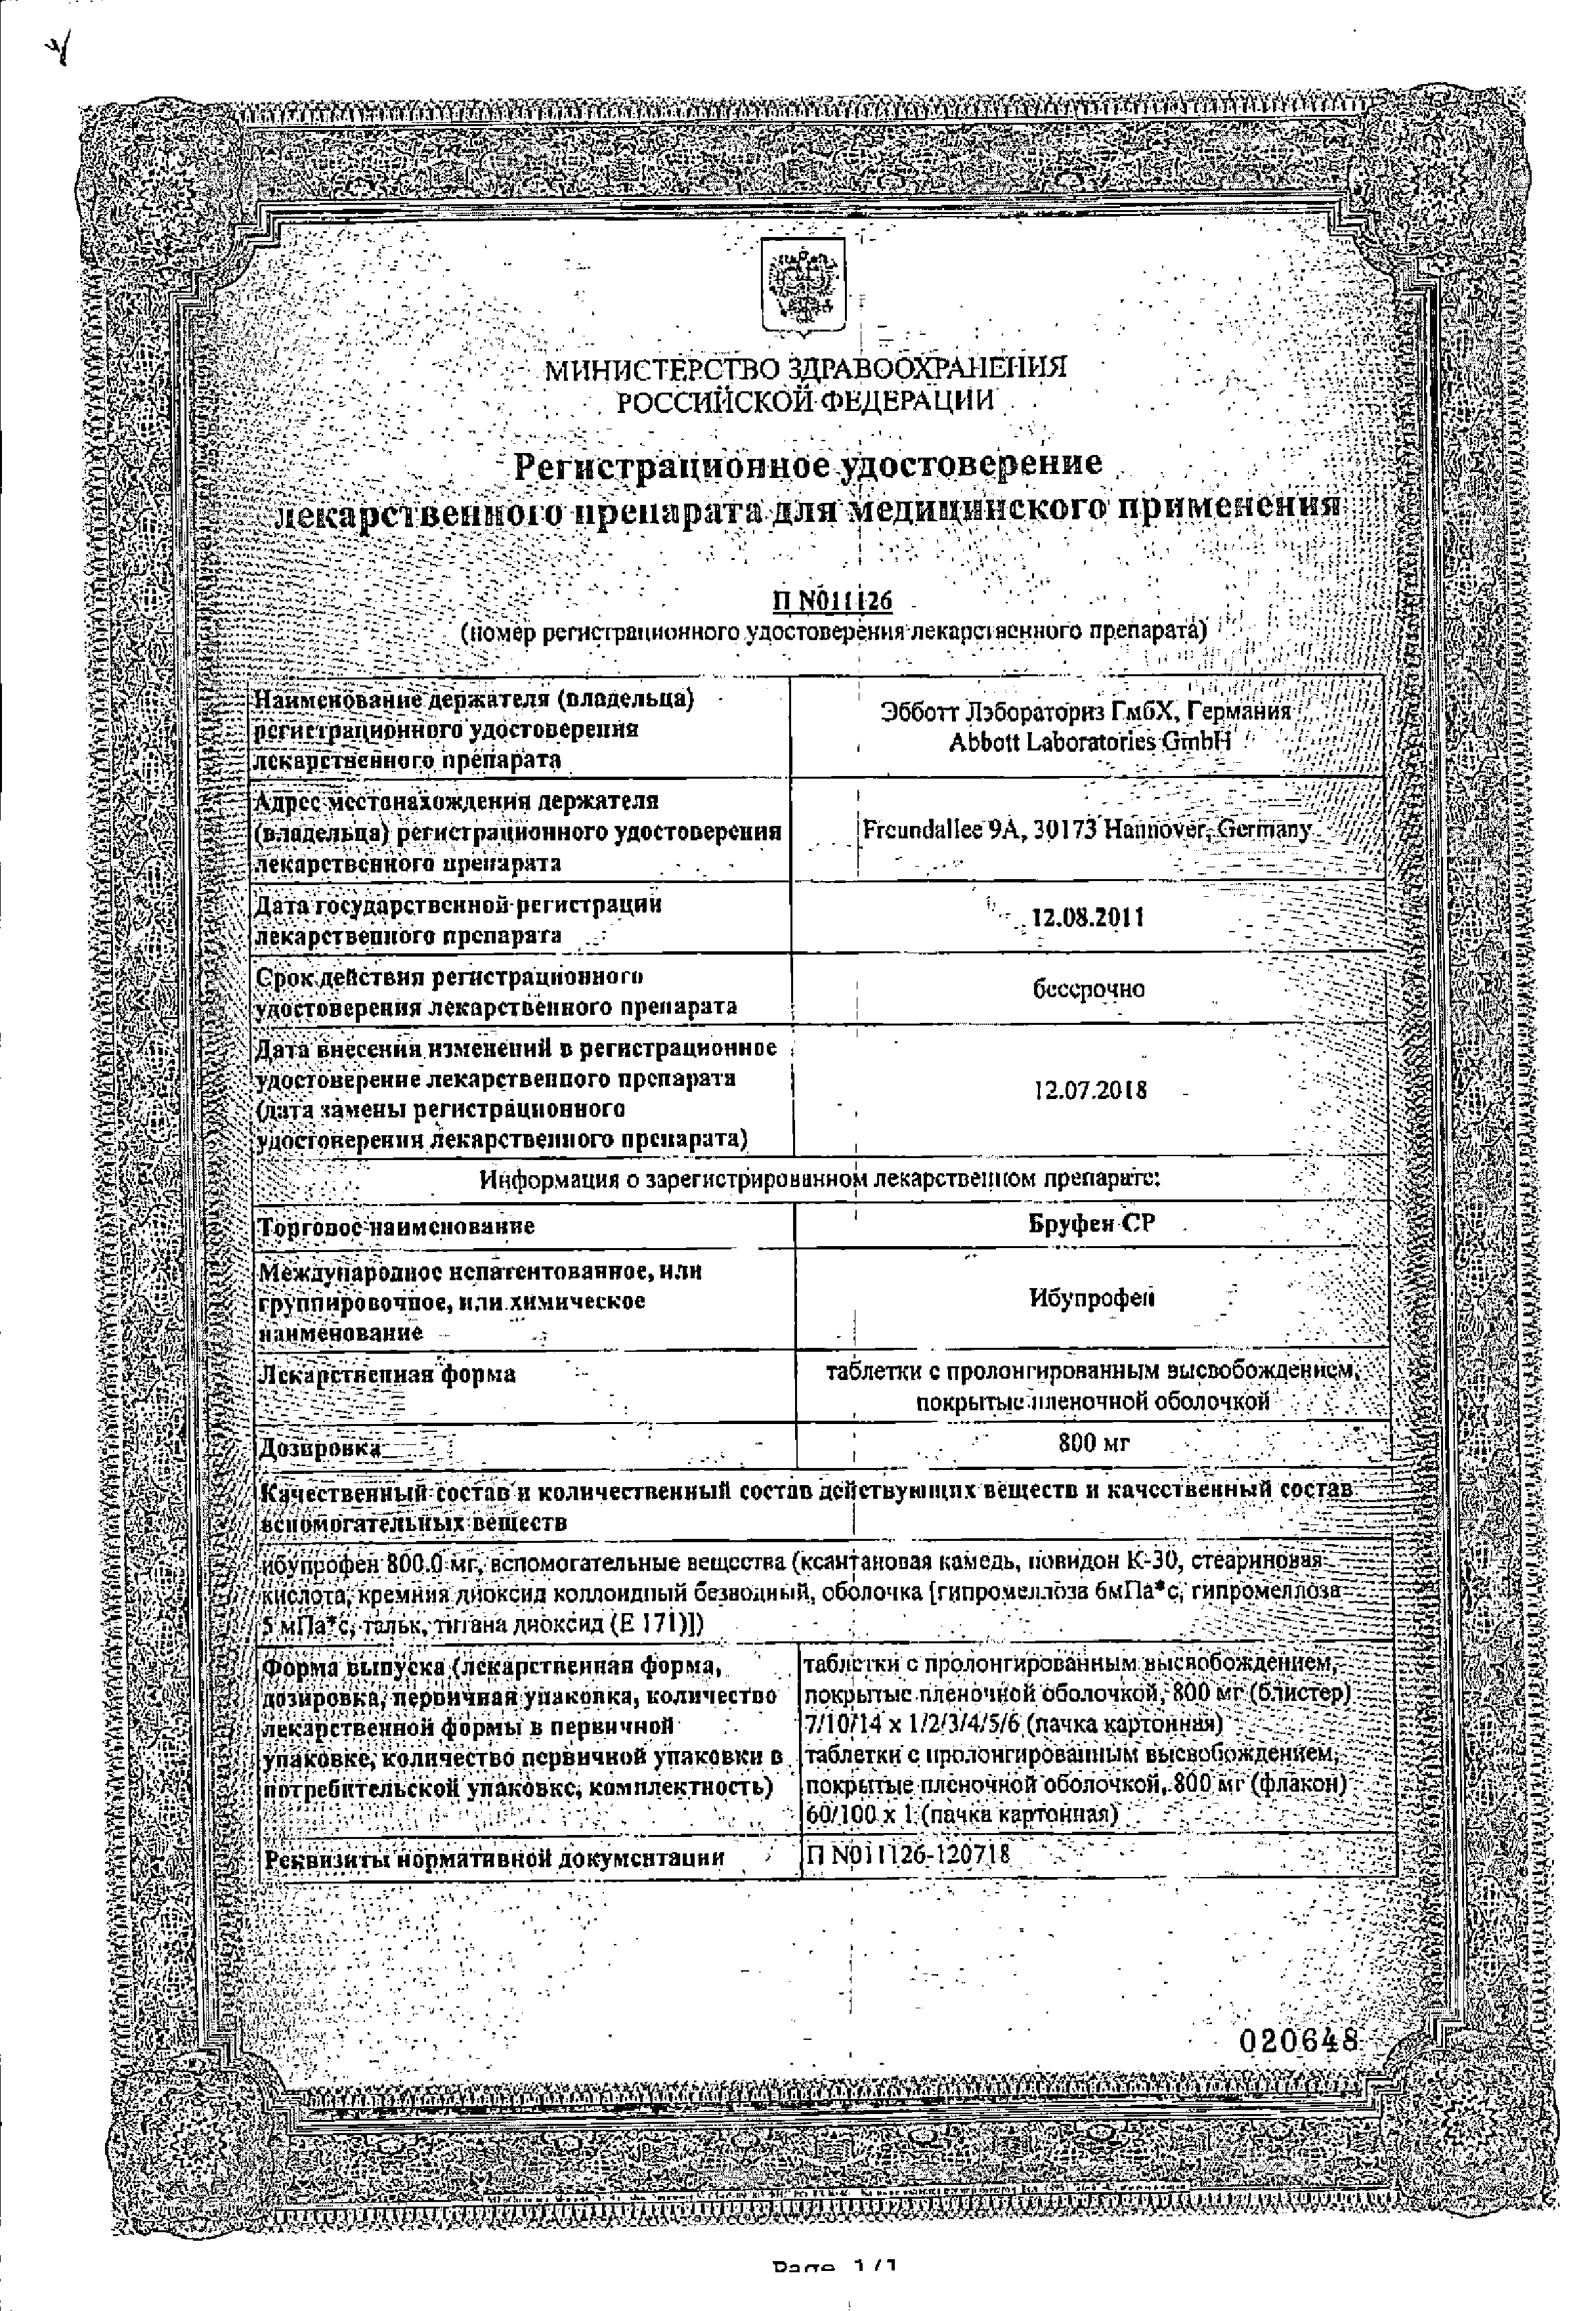 Бруфен СР сертификат